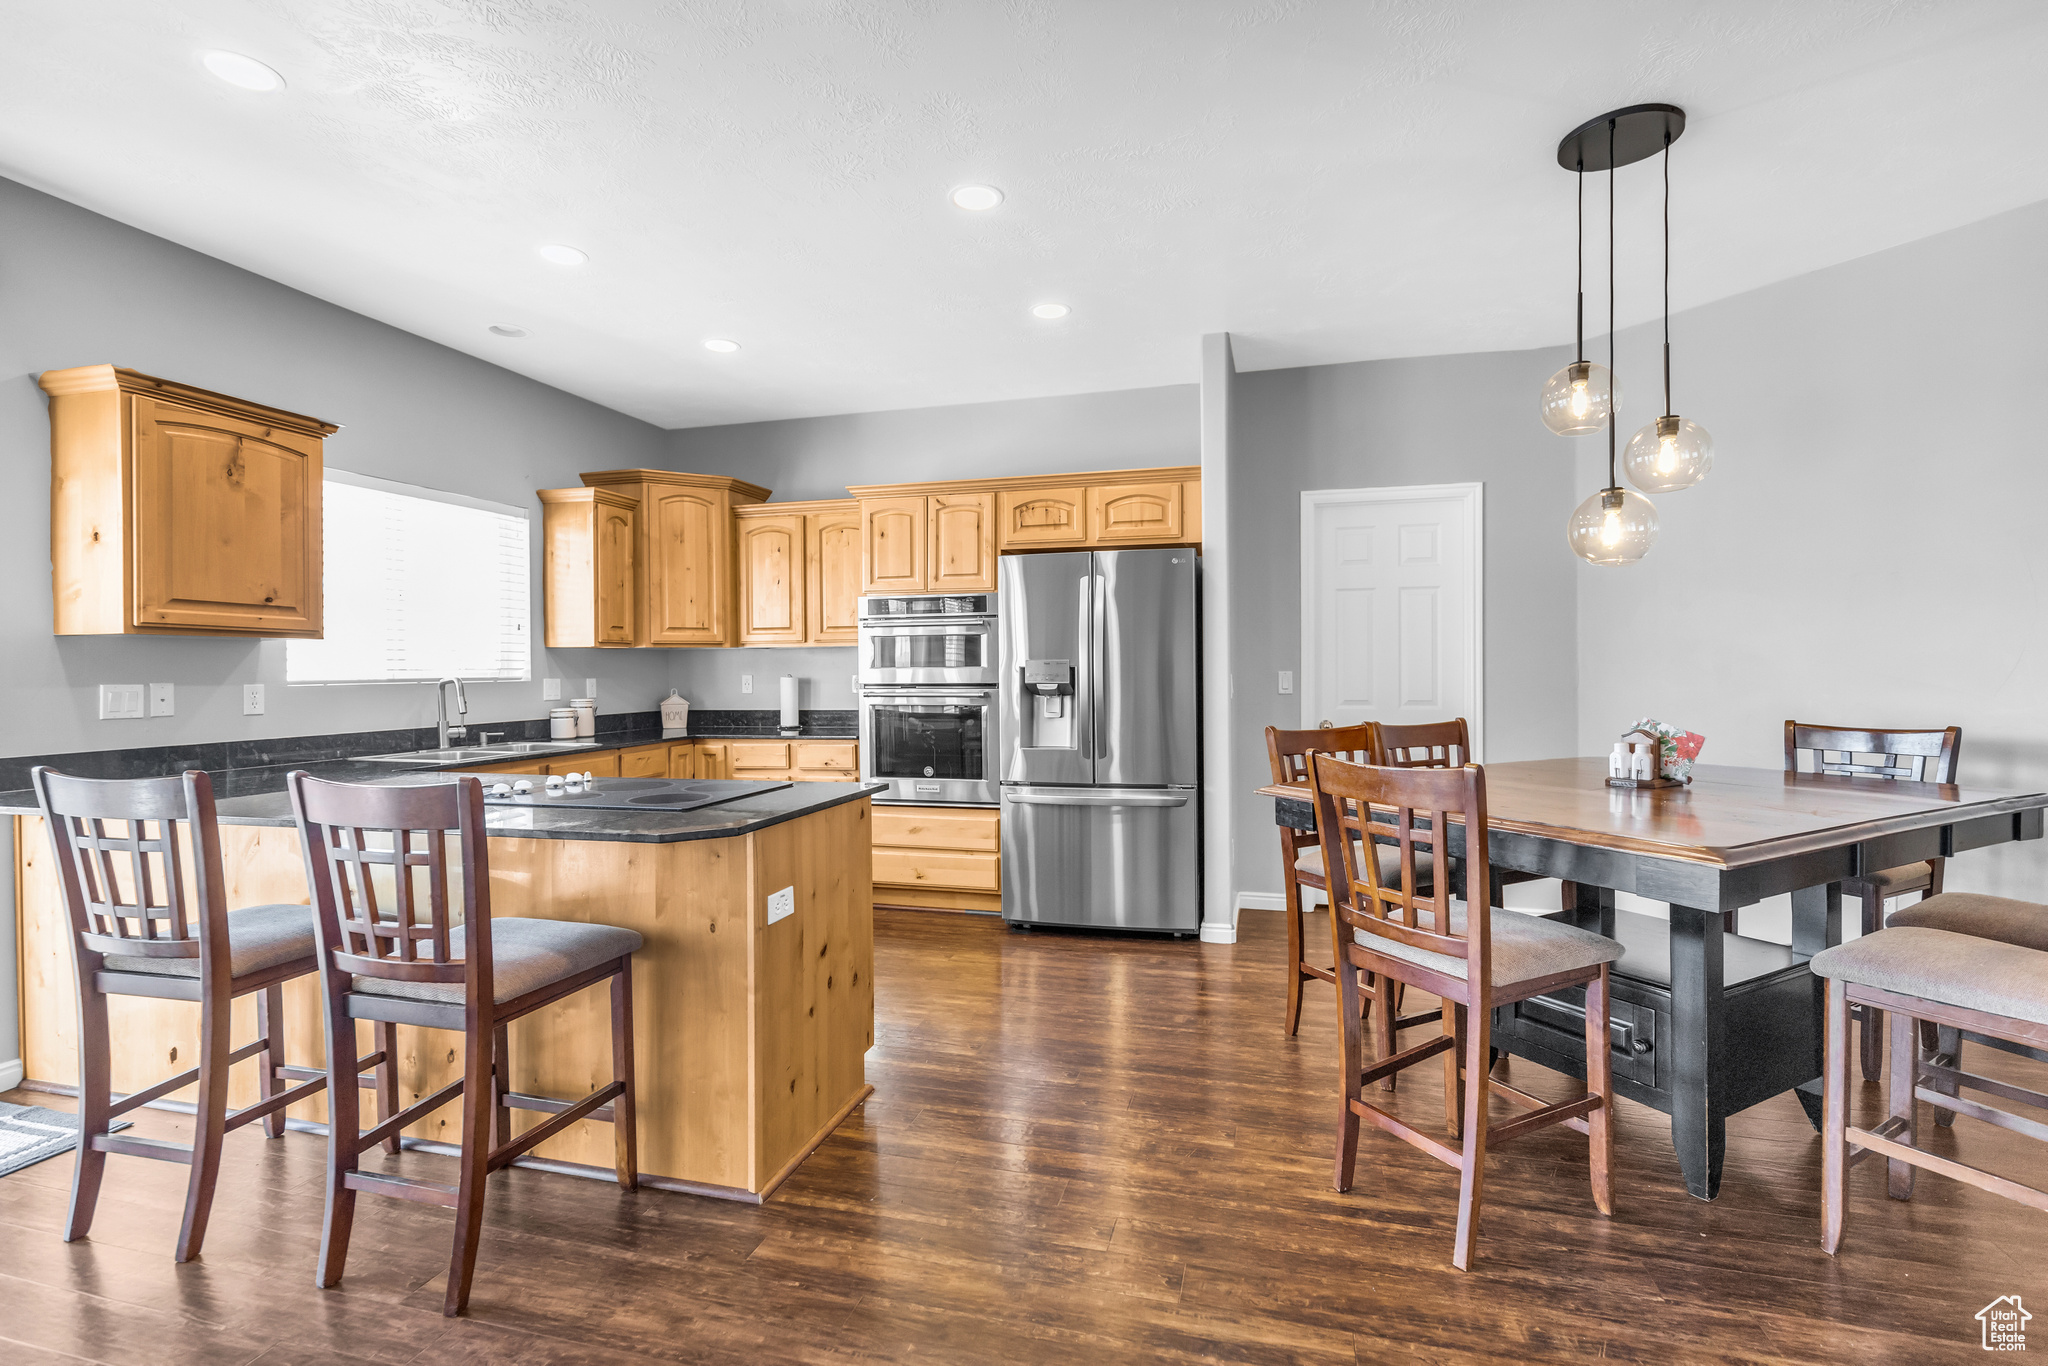 Kitchen featuring decorative light fixtures, a kitchen island, stainless steel appliances, dark hardwood / wood-style flooring, and a breakfast bar